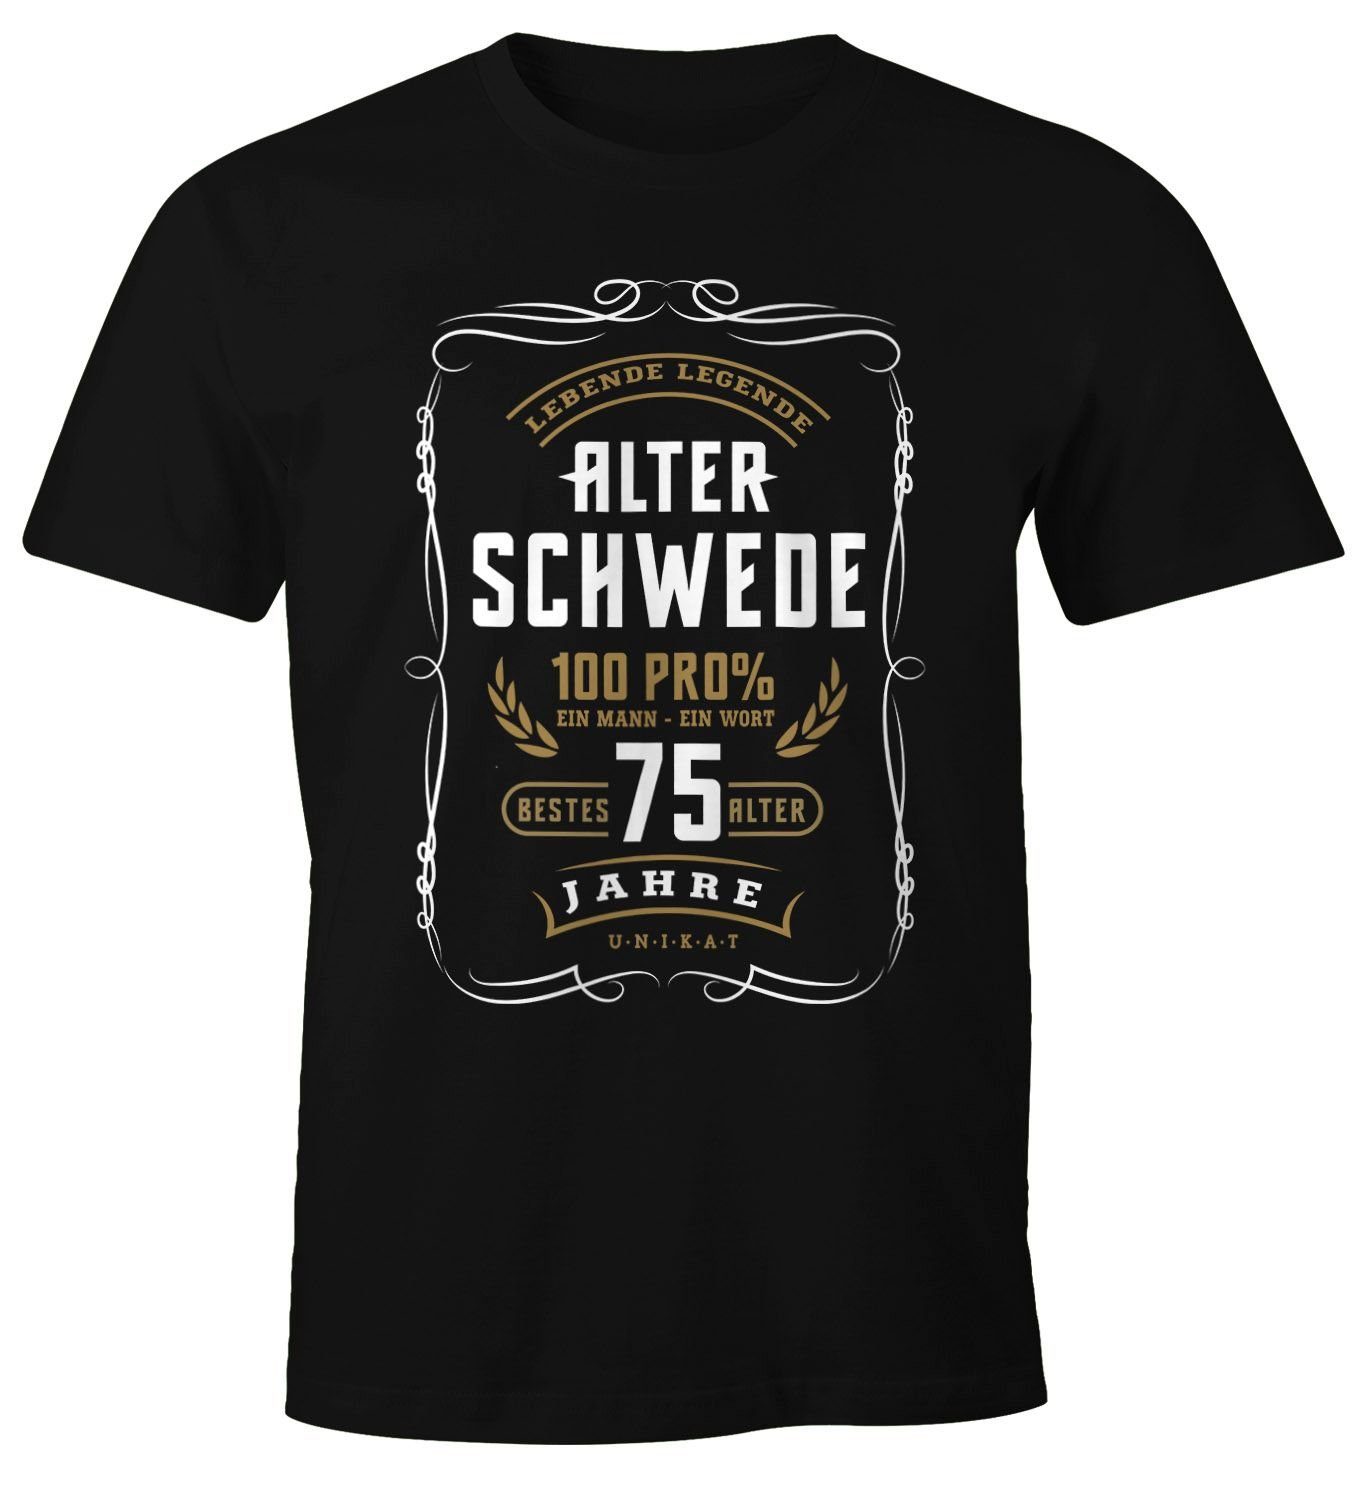 MoonWorks Print-Shirt Herren Geschenk T-Shirt Geburtstag Lebende Legende Alter Schwede 30-80 Jahre Moonworks® mit Print 75 schwarz